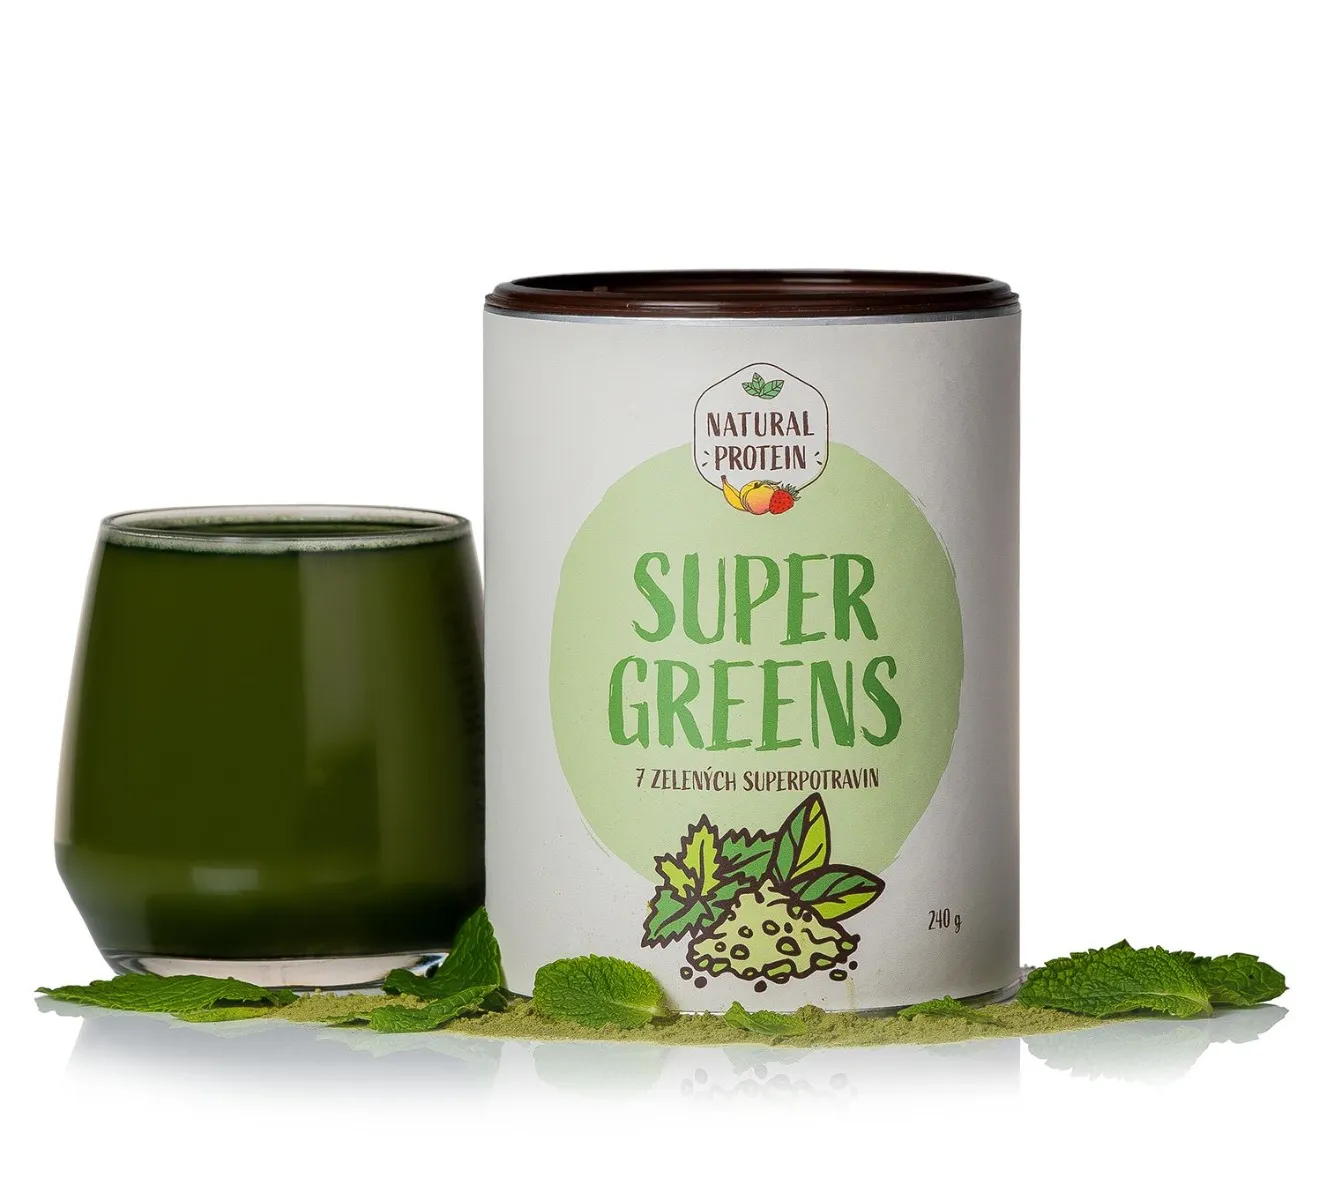 NaturalProtein Super greens 240 g